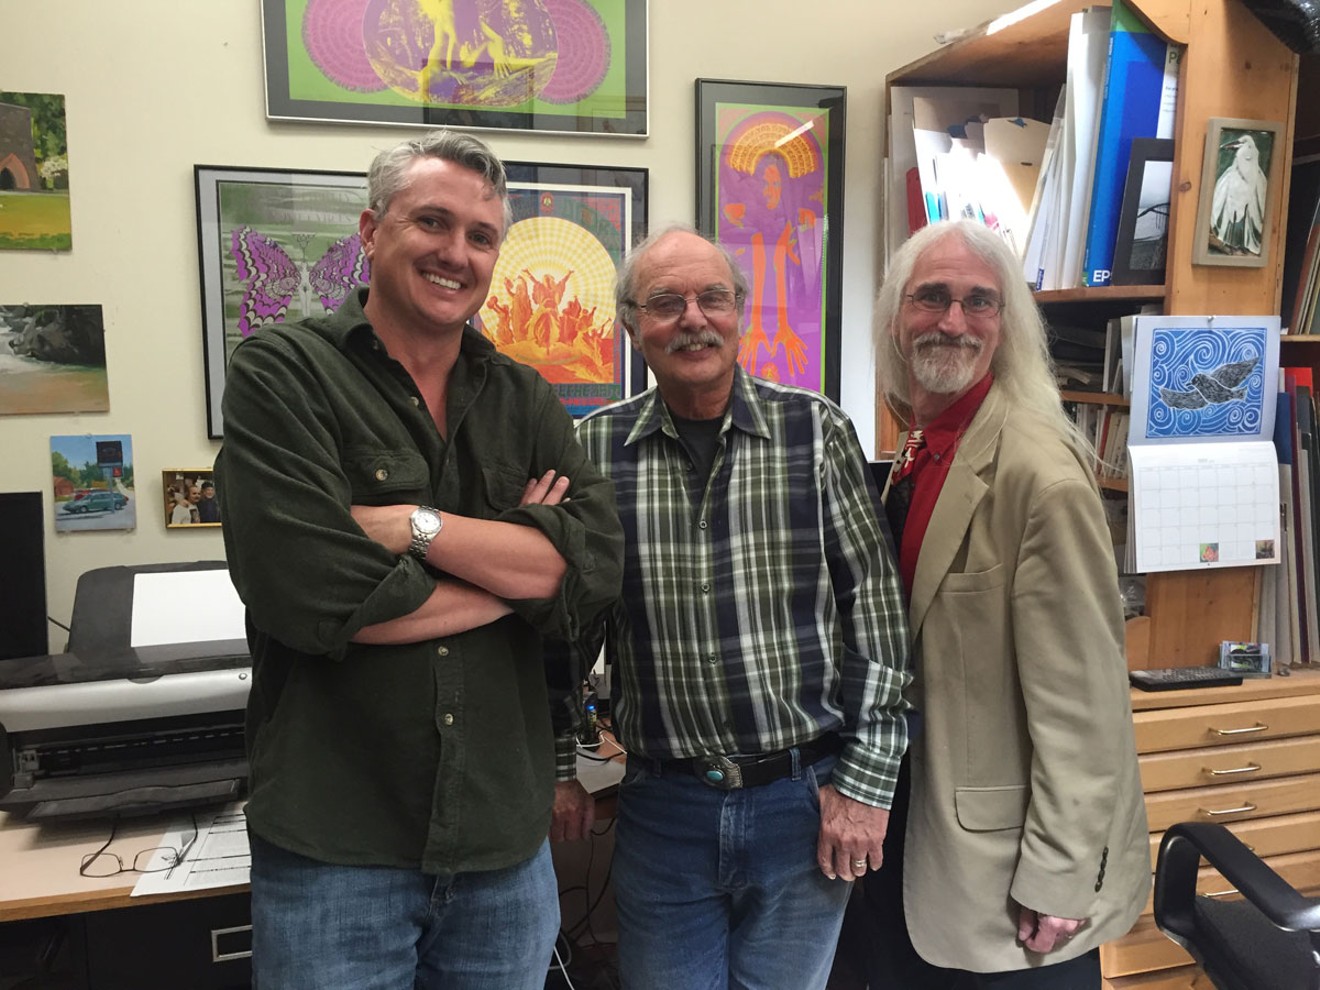 Filmmakers Dan Obarski (left) and Scott Montgomery (right) with artist Bob Schnepf.